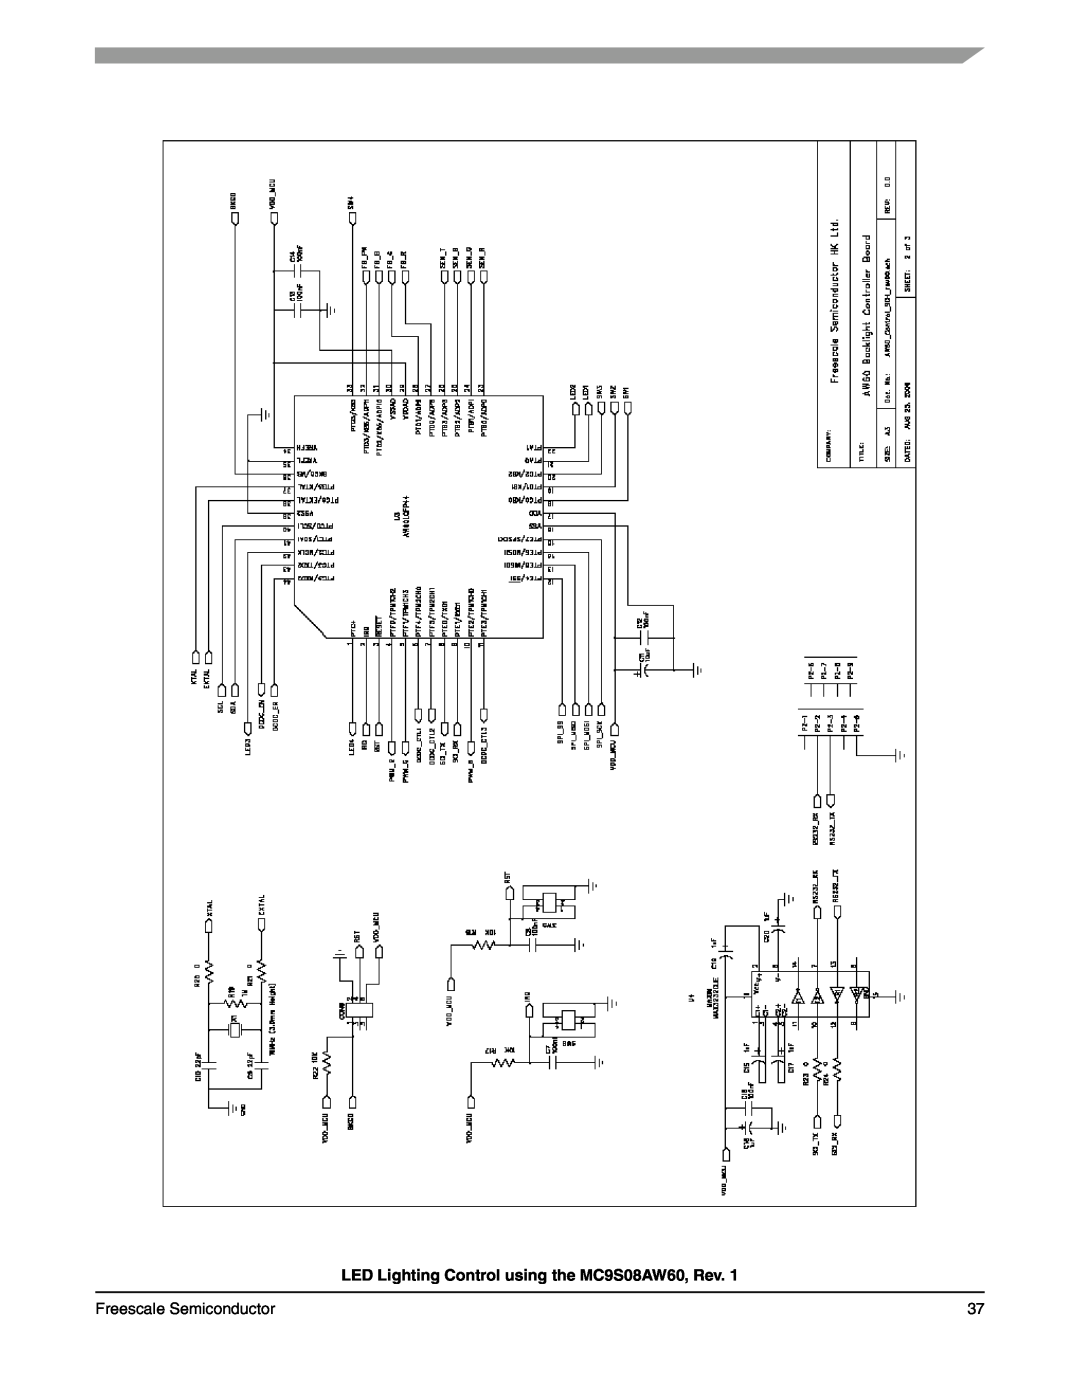 Freescale Semiconductor manual LED Lighting Control using the MC9S08AW60, Rev, Freescale Semiconductor 